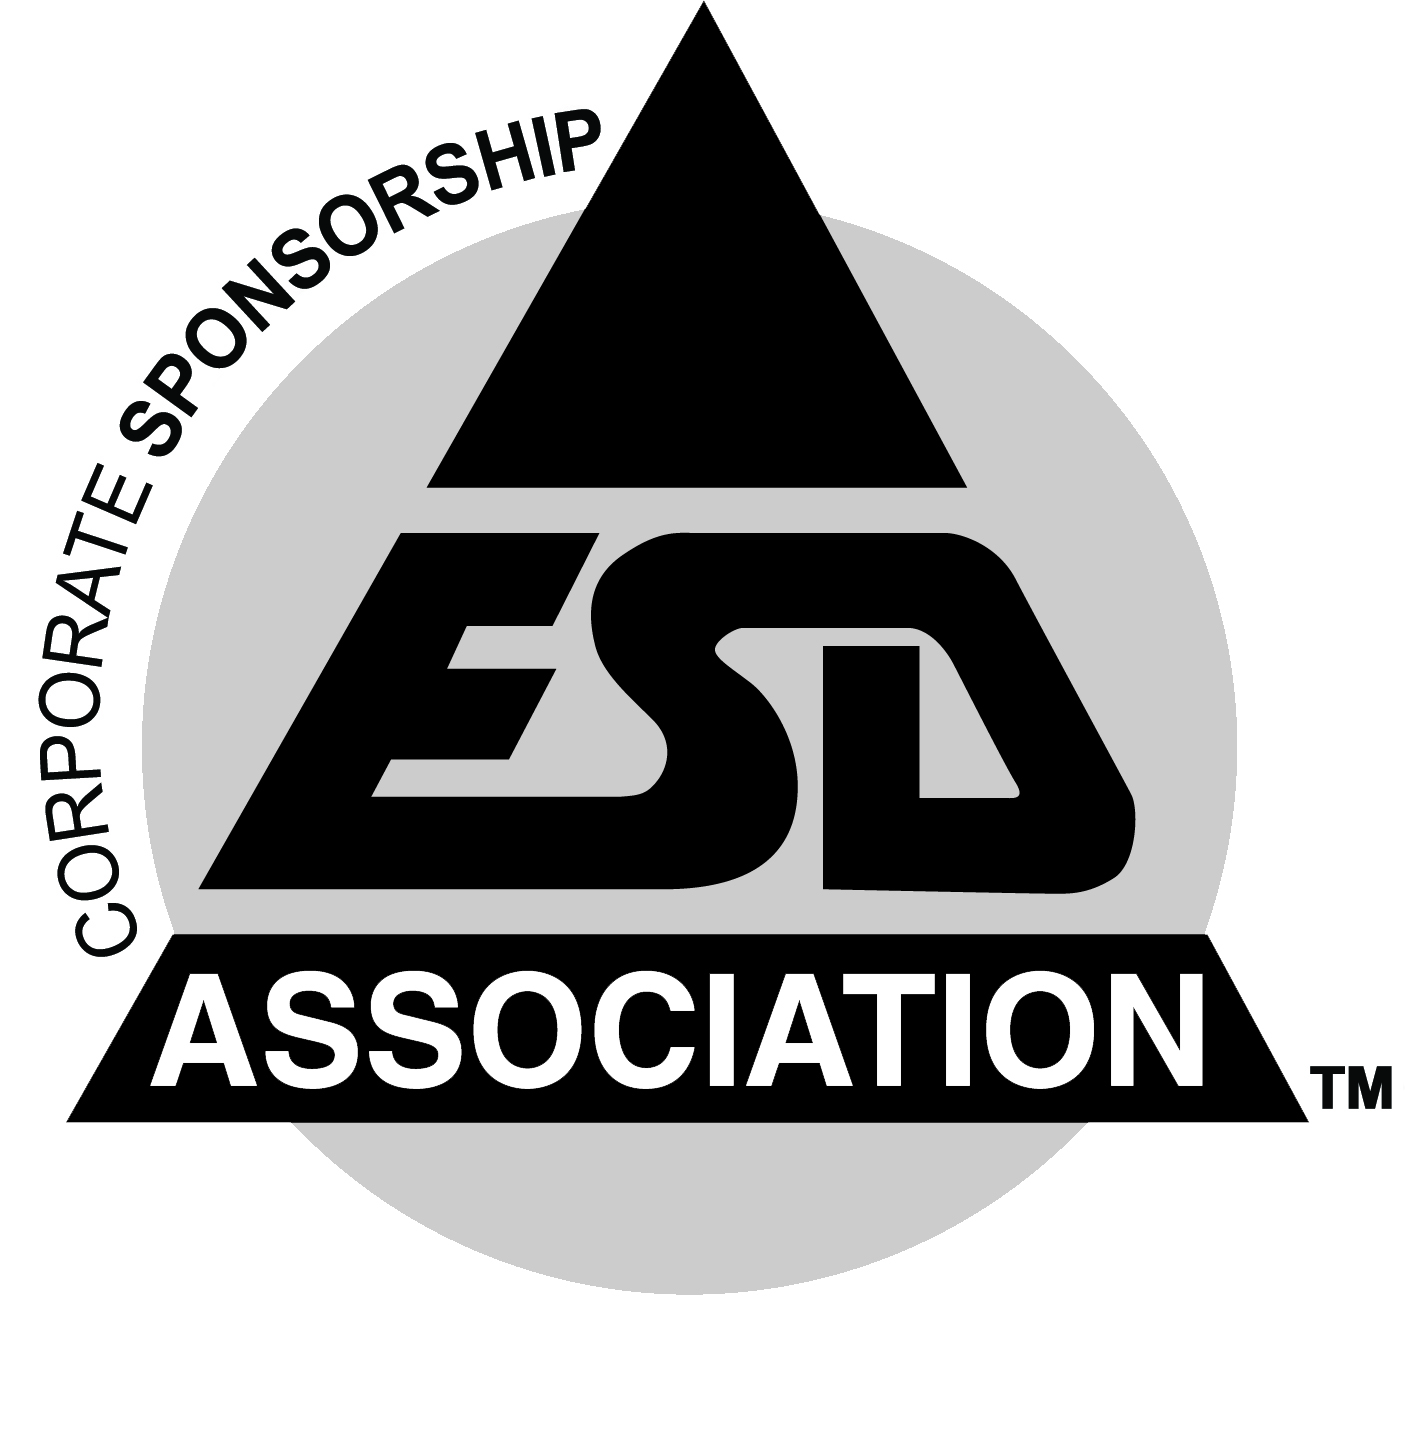 ESD Association - Corporate Sponsorship